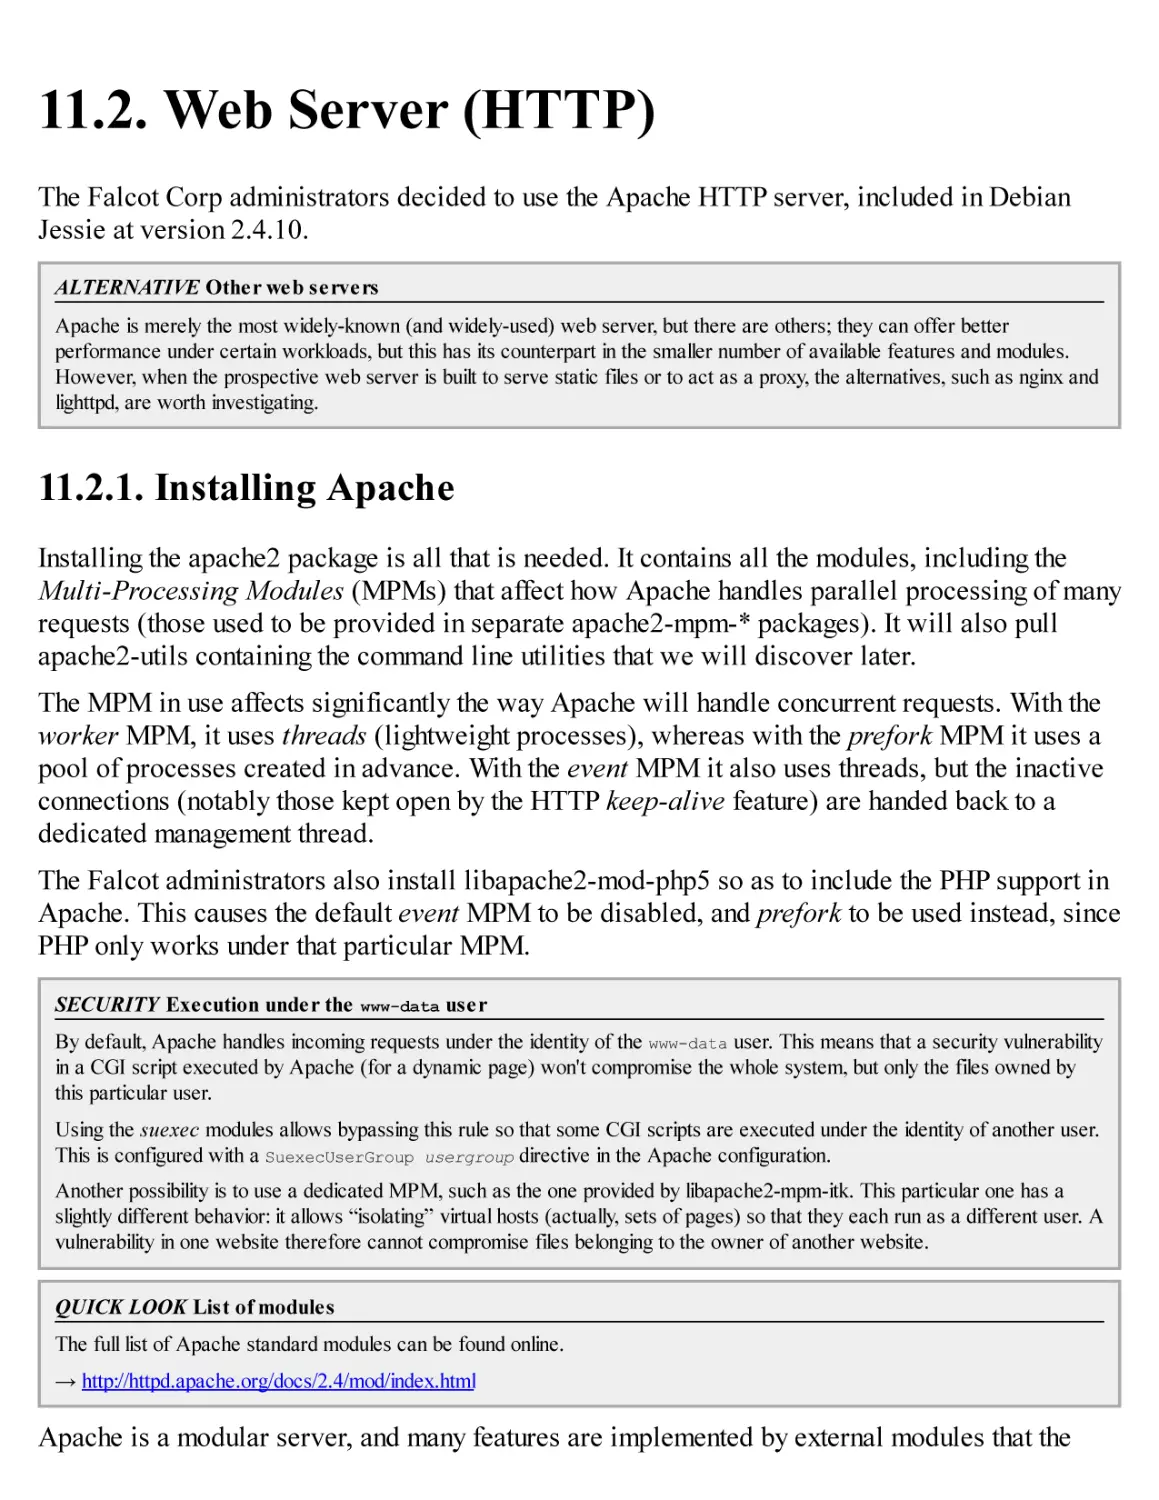 11.2. Web Server (HTTP)
11.2.1. Installing Apache